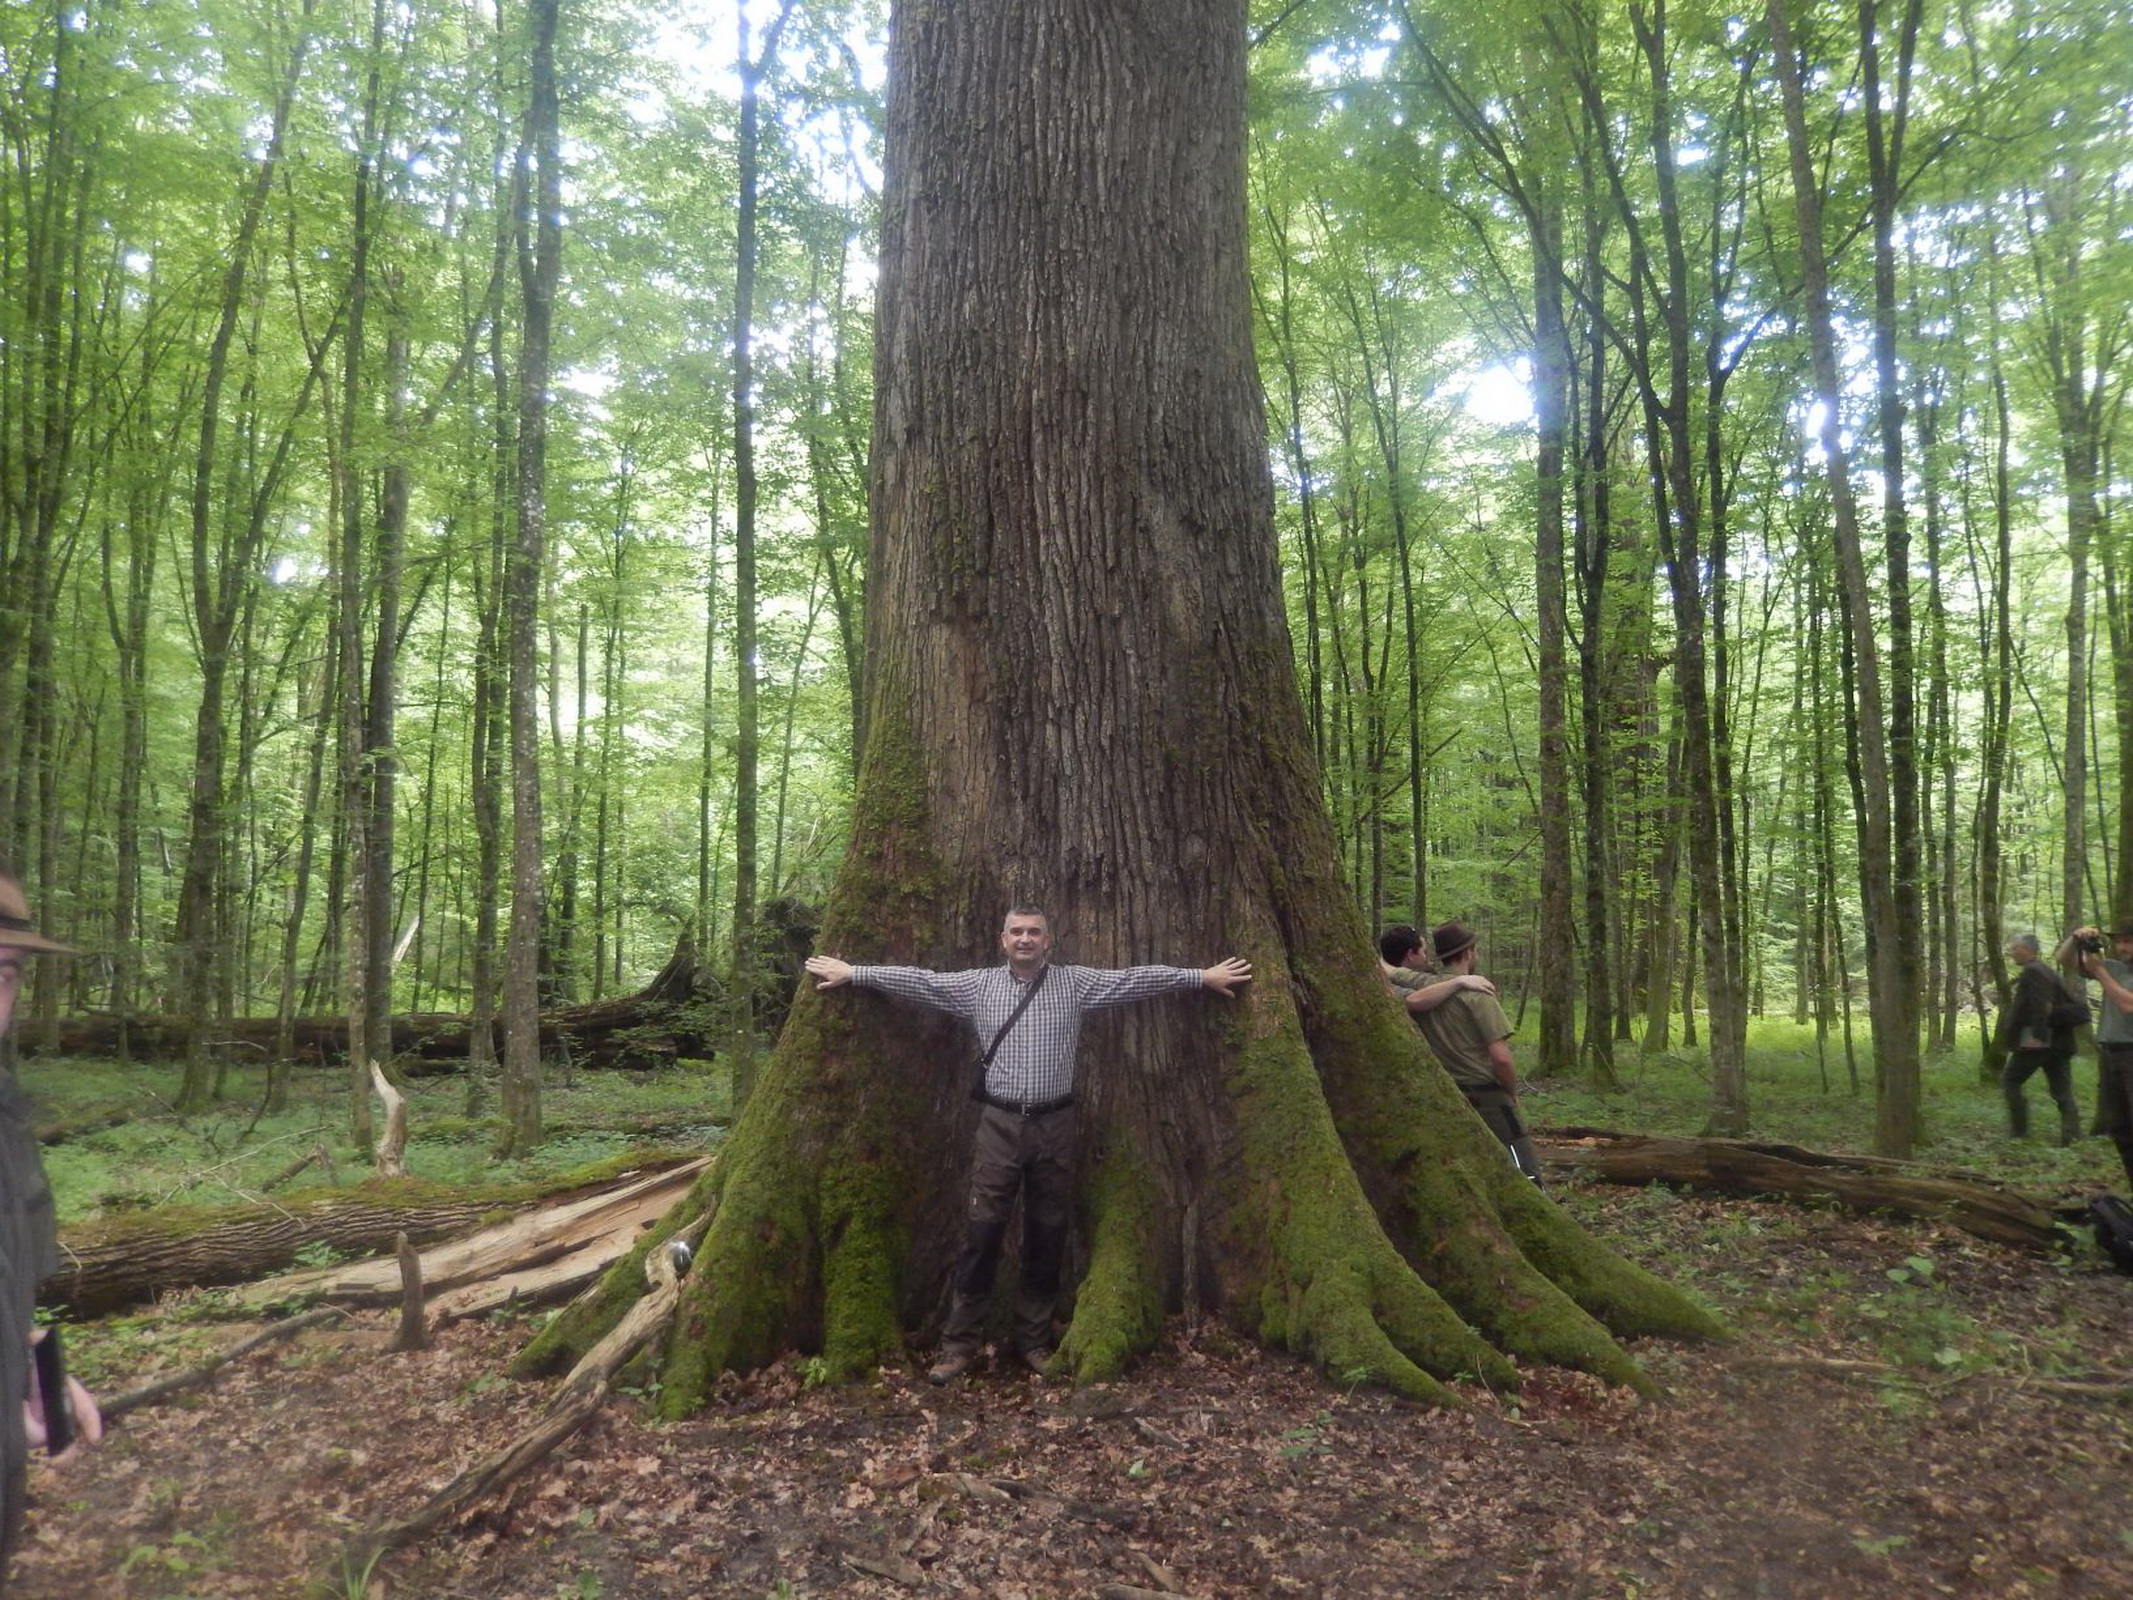 Prasnik virgin forest, Pedunculate oak (Quercus robur L.), 262 cm of diameter at height of 1.80 m, height 44.5 m, volume 71 m3, age 247 years (C) Anic